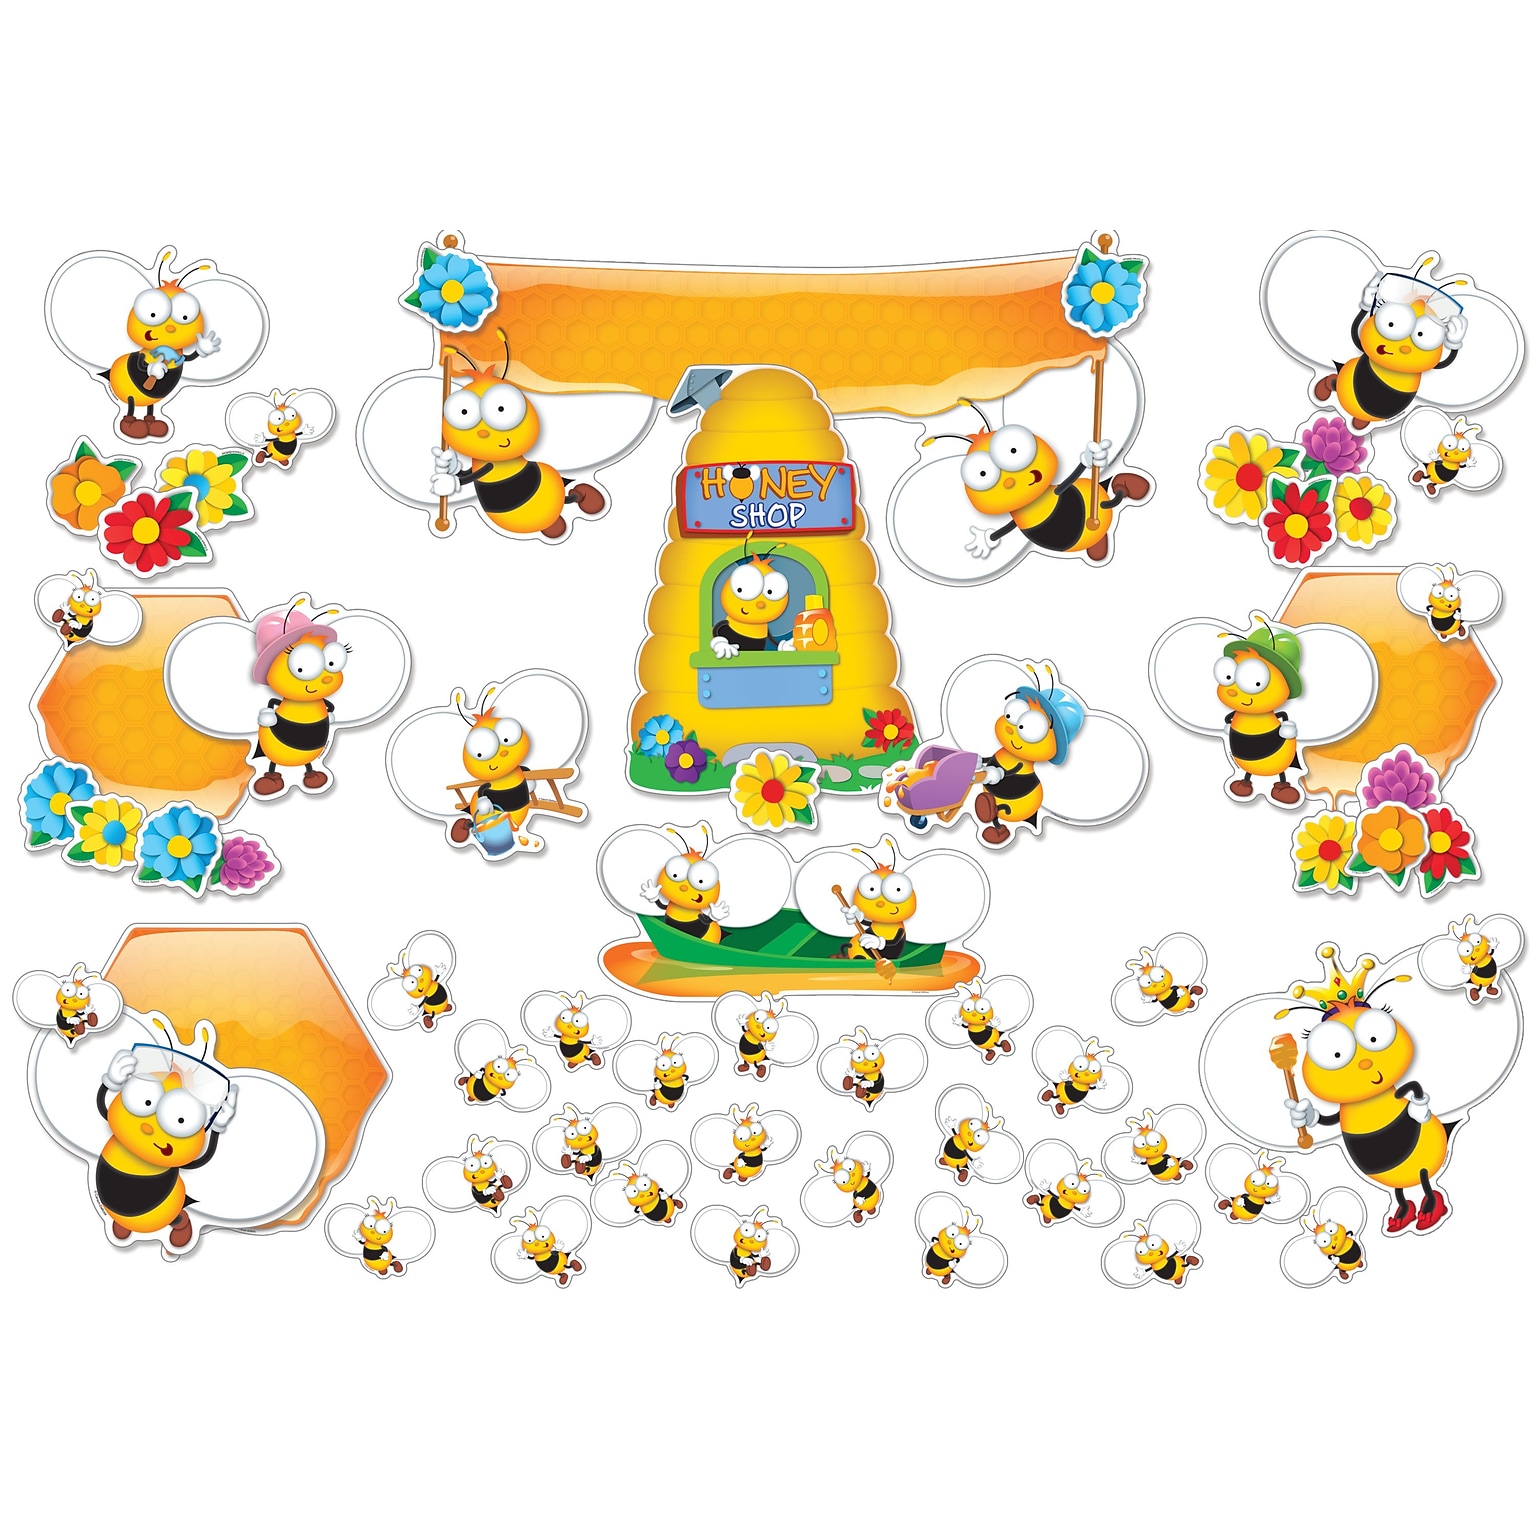 Carson-Dellosa Buzz Worthy Bees Bulletin Board Set, 67 Pieces/Set